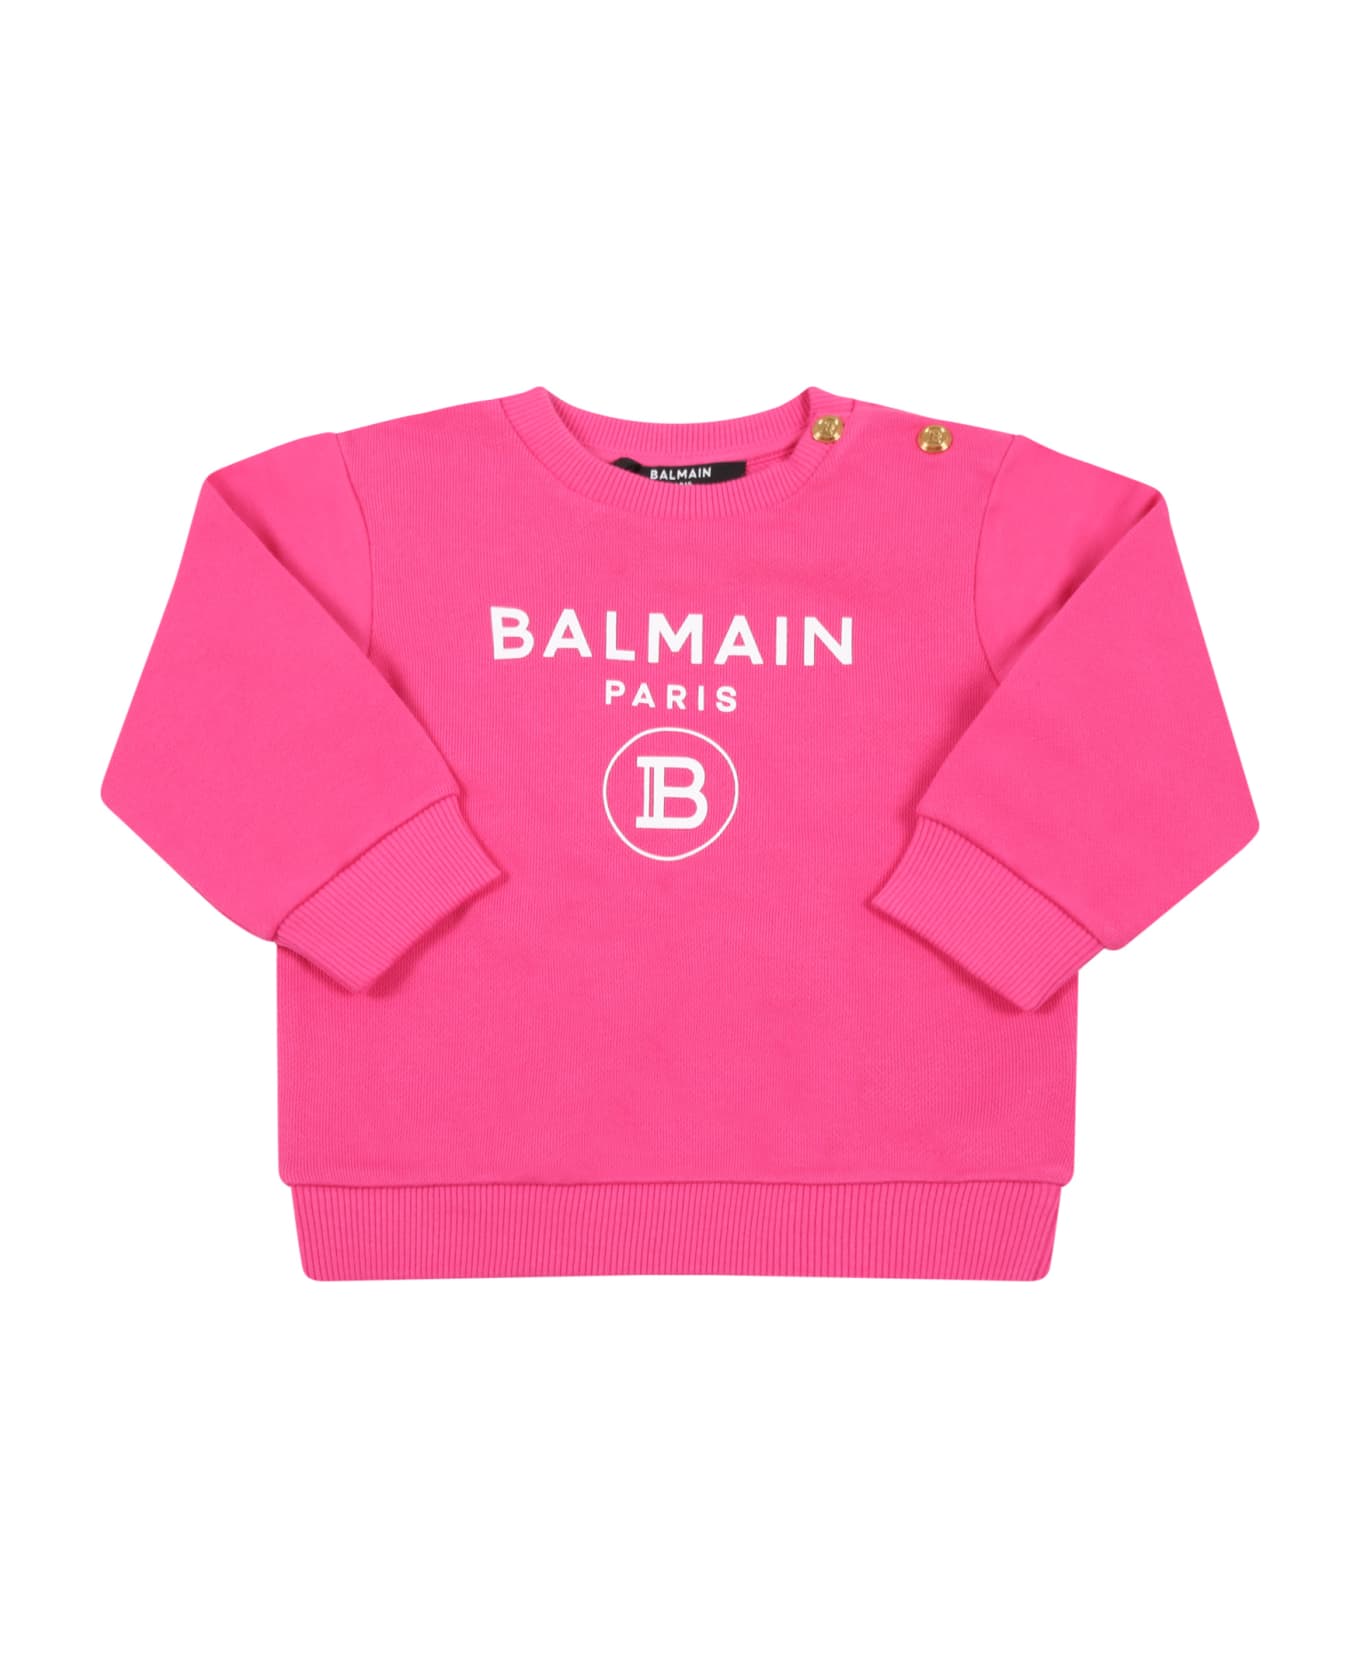 Balmain Fuchsia Sweatshirt For Baby Girl With Logos - Fuchsia